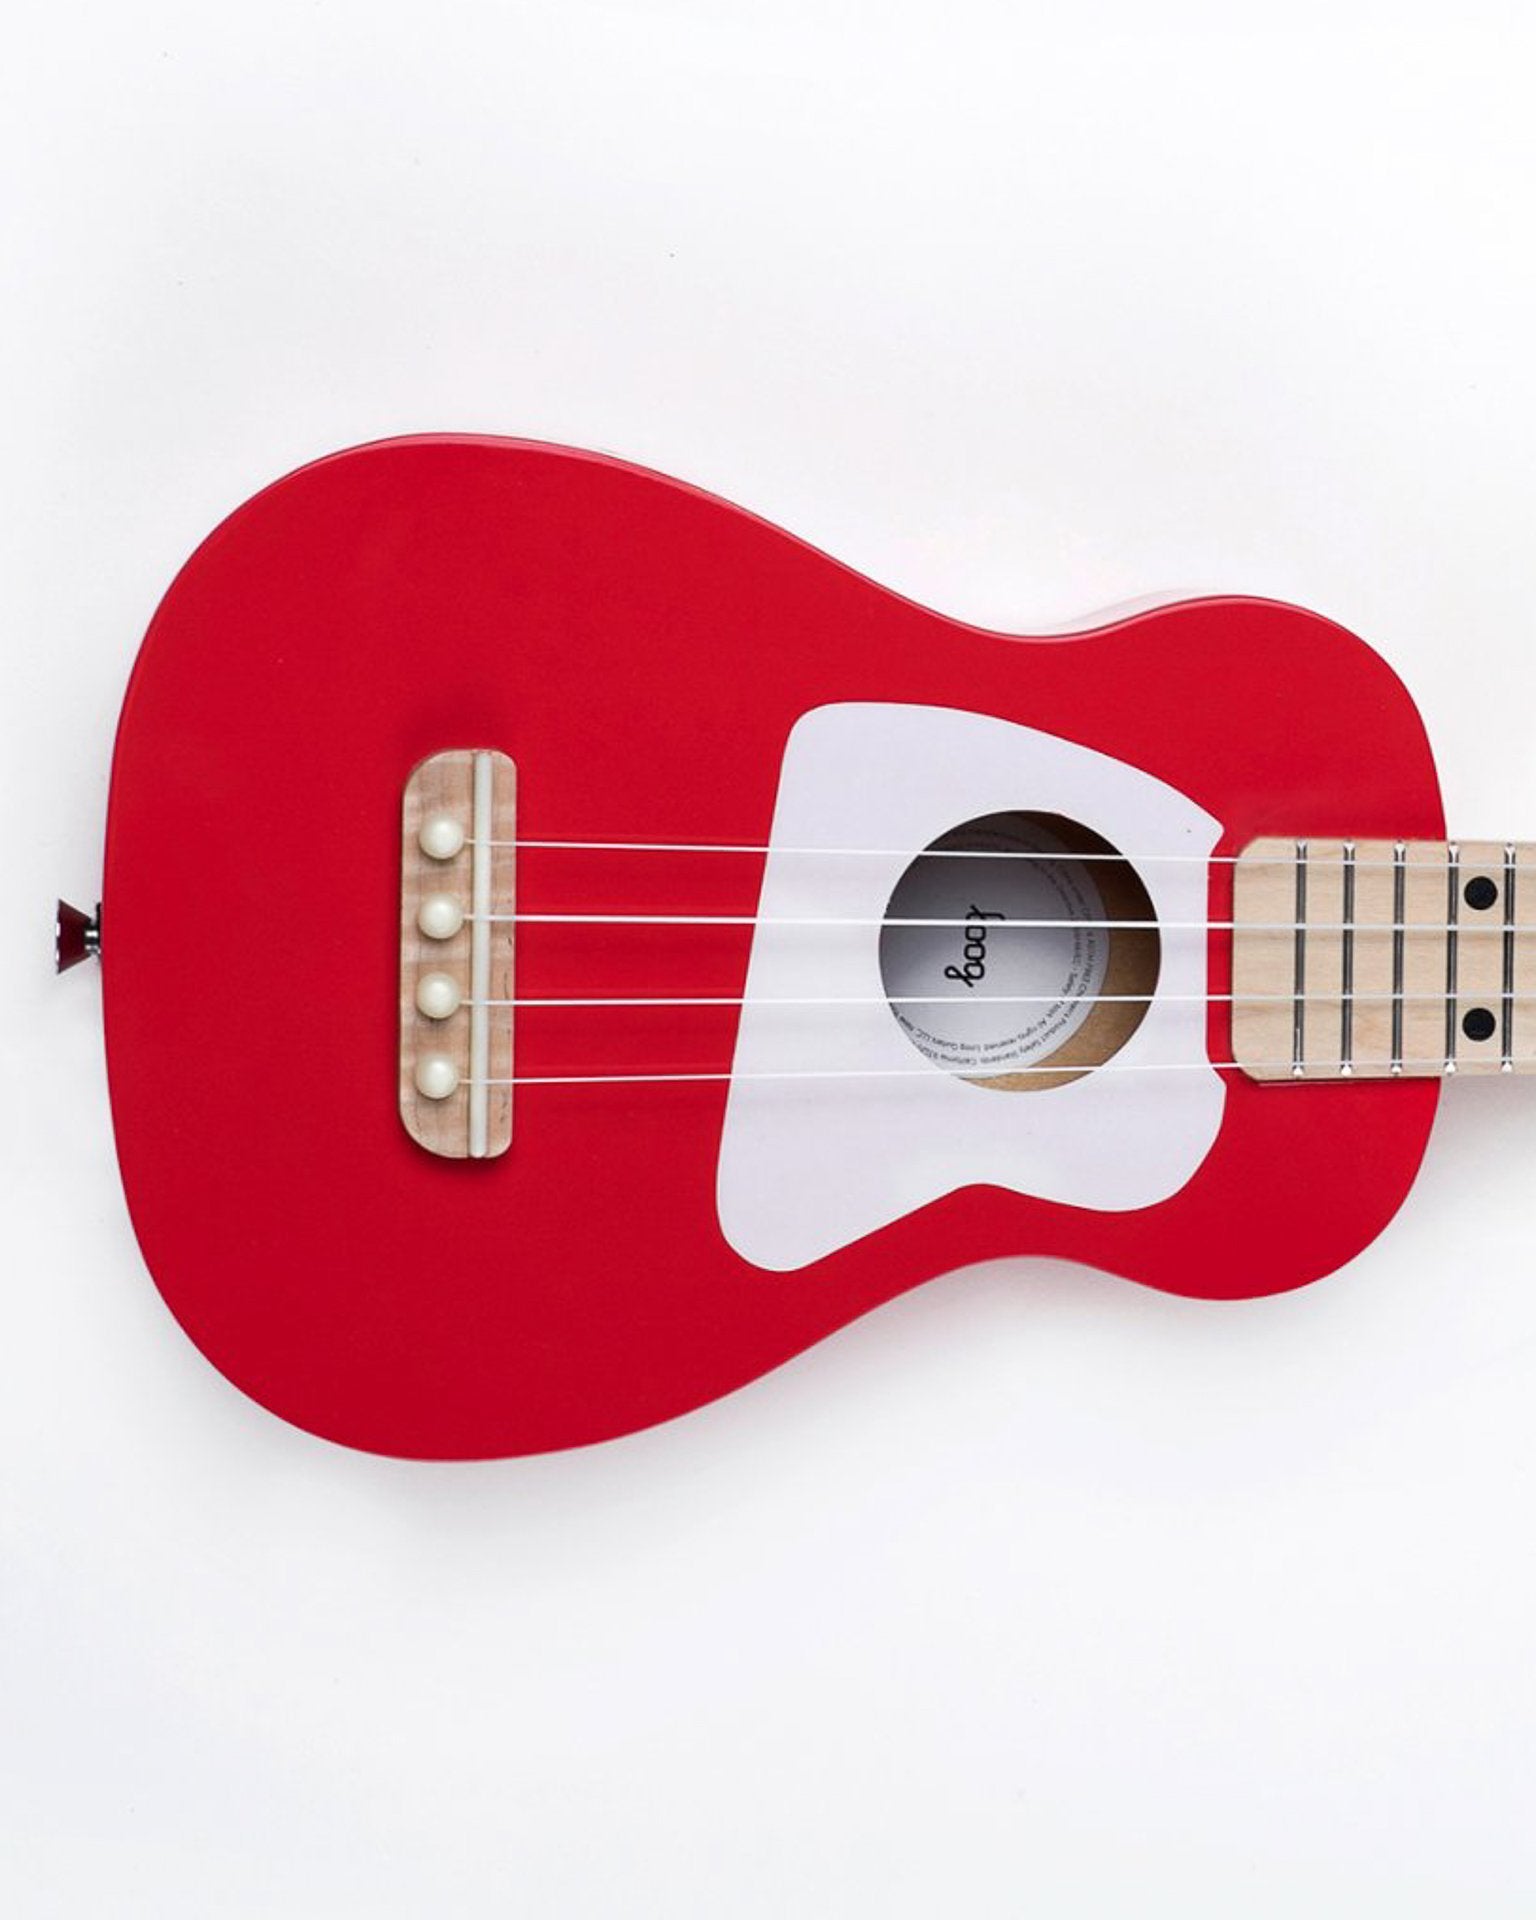 Little loog guitars play loog ukulele in red